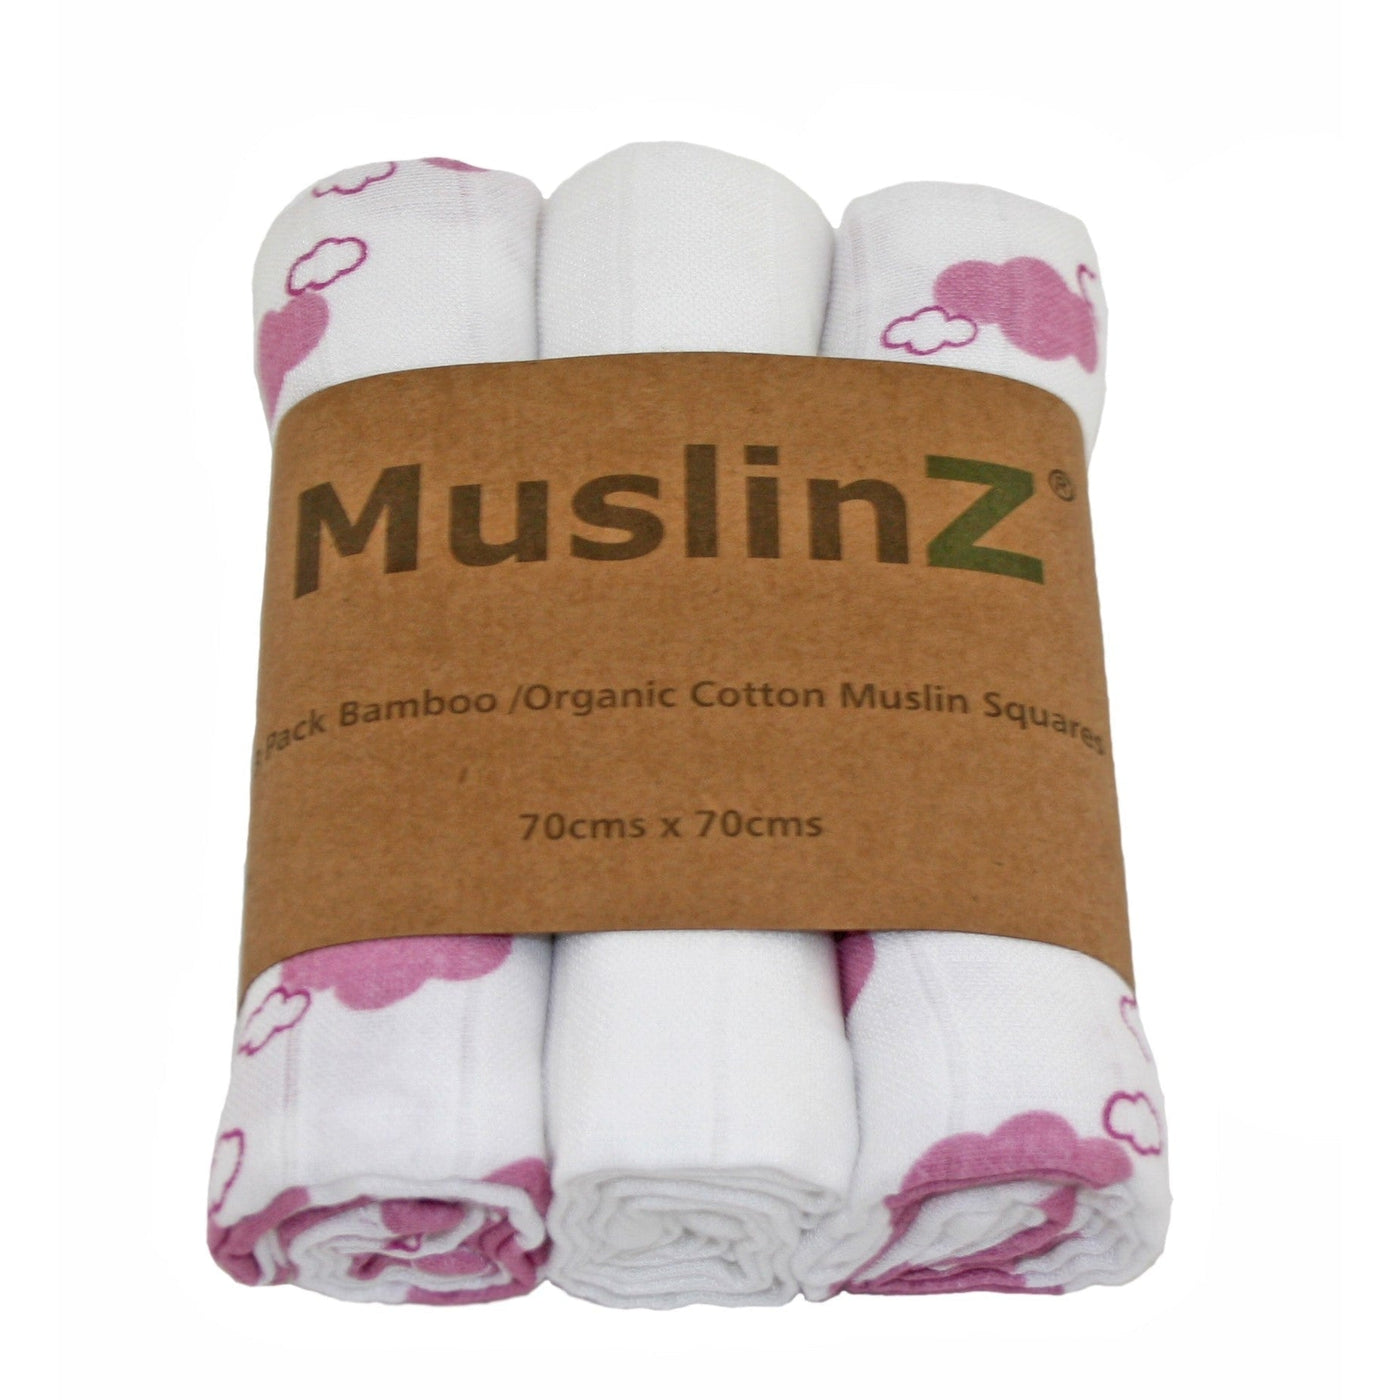 MuslinZ 3 Pack Bamboo-Organic Cotton Muslin Squares 70 x 70 cm - Cloud Print - Pink Cloud